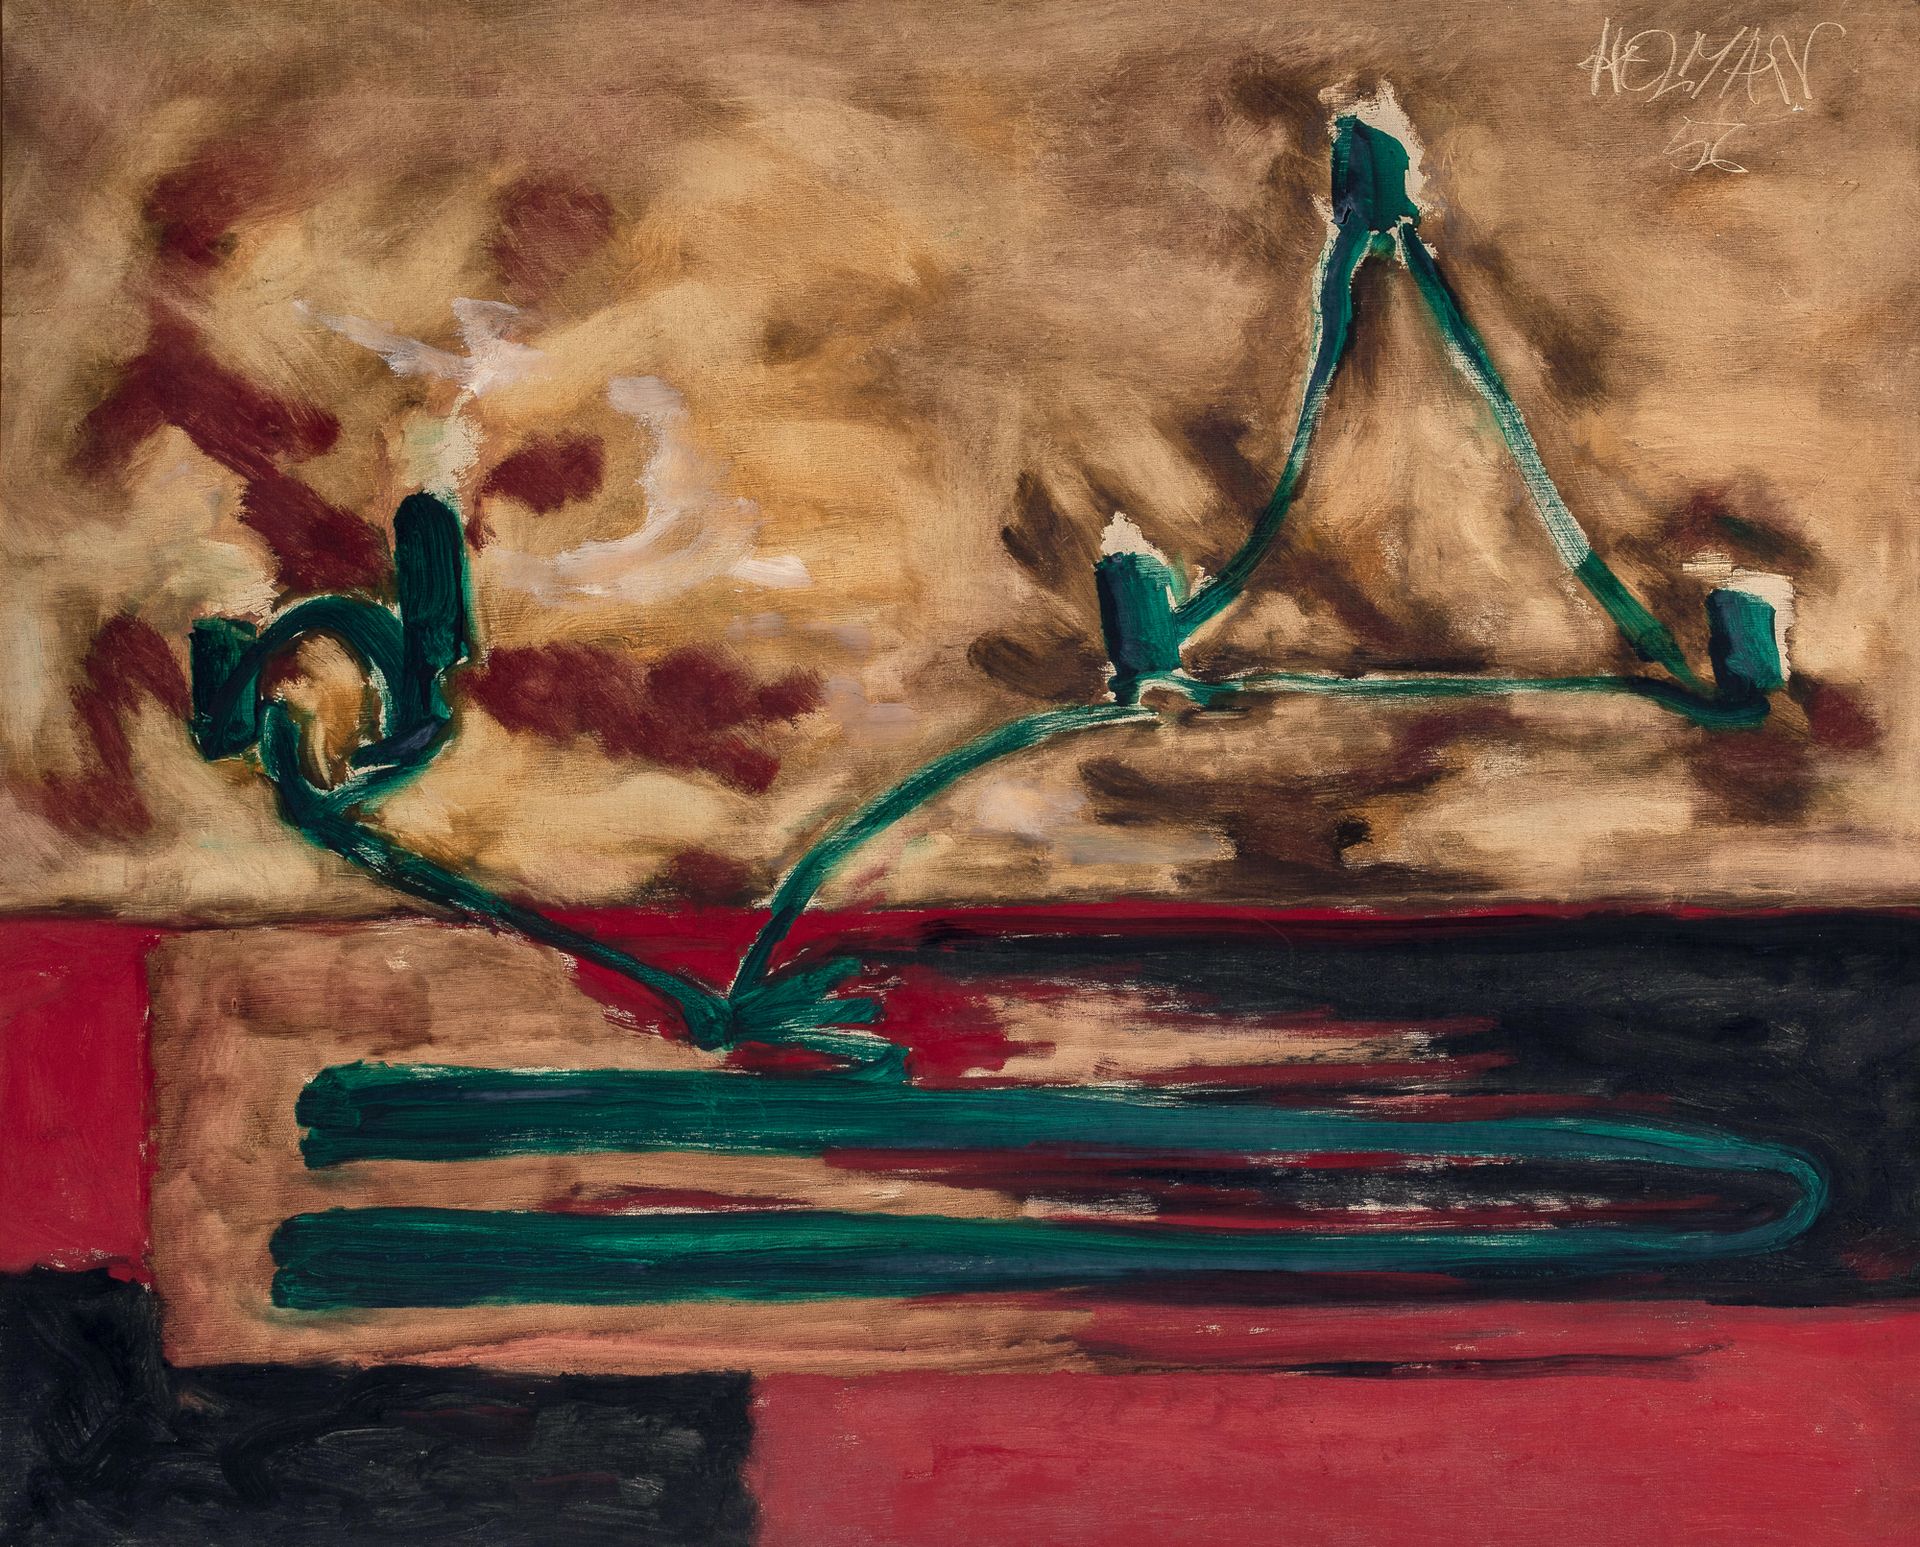 ROBERT HELMAN (1910-1990) - 创作，1956
布面油画，右上角有签名 81 x 100 cm